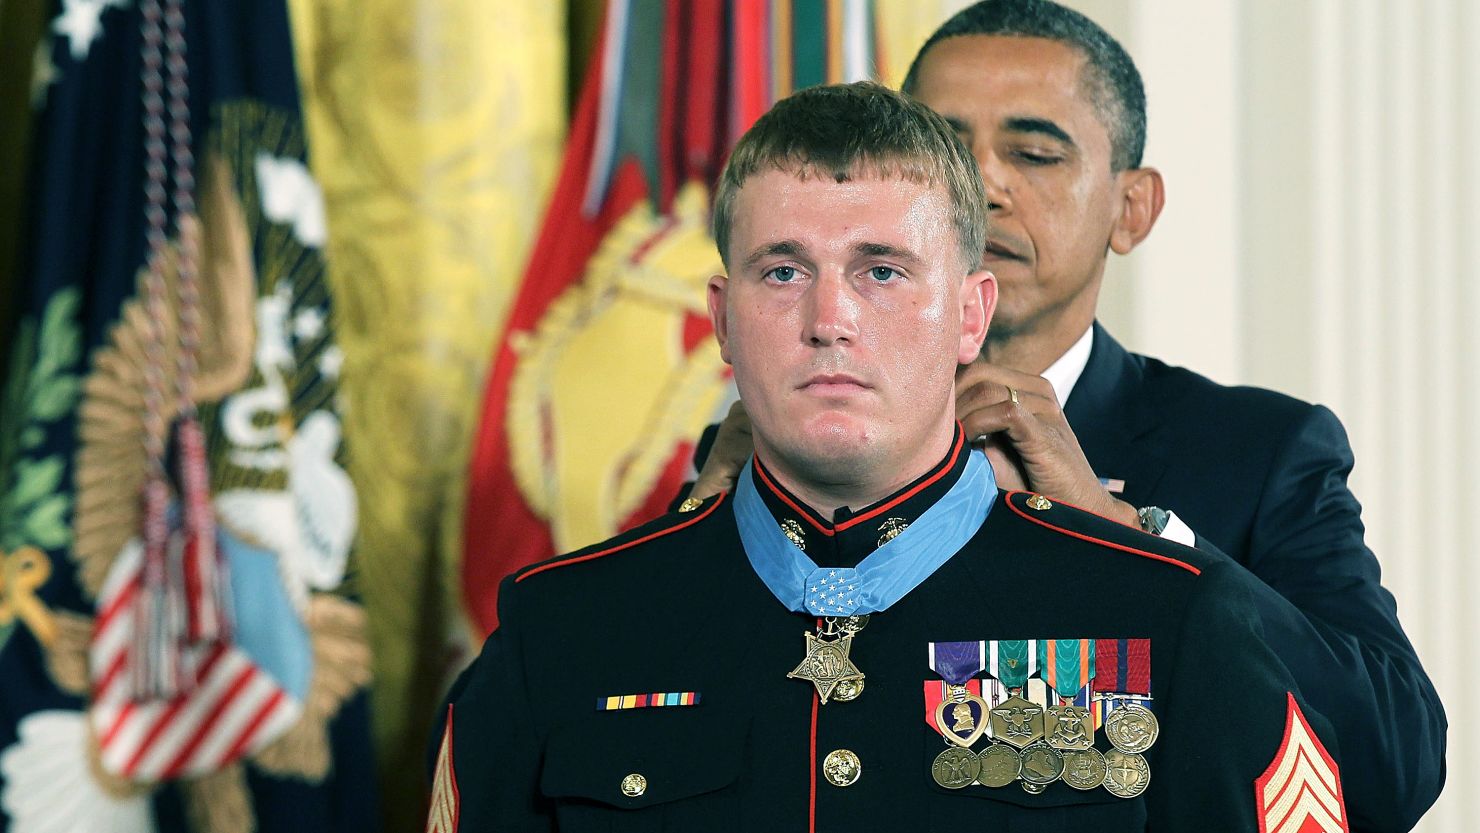 Sgt. Dakota Meyer, 23, received the Medal of Honor in September for heroism in Afghanistan.